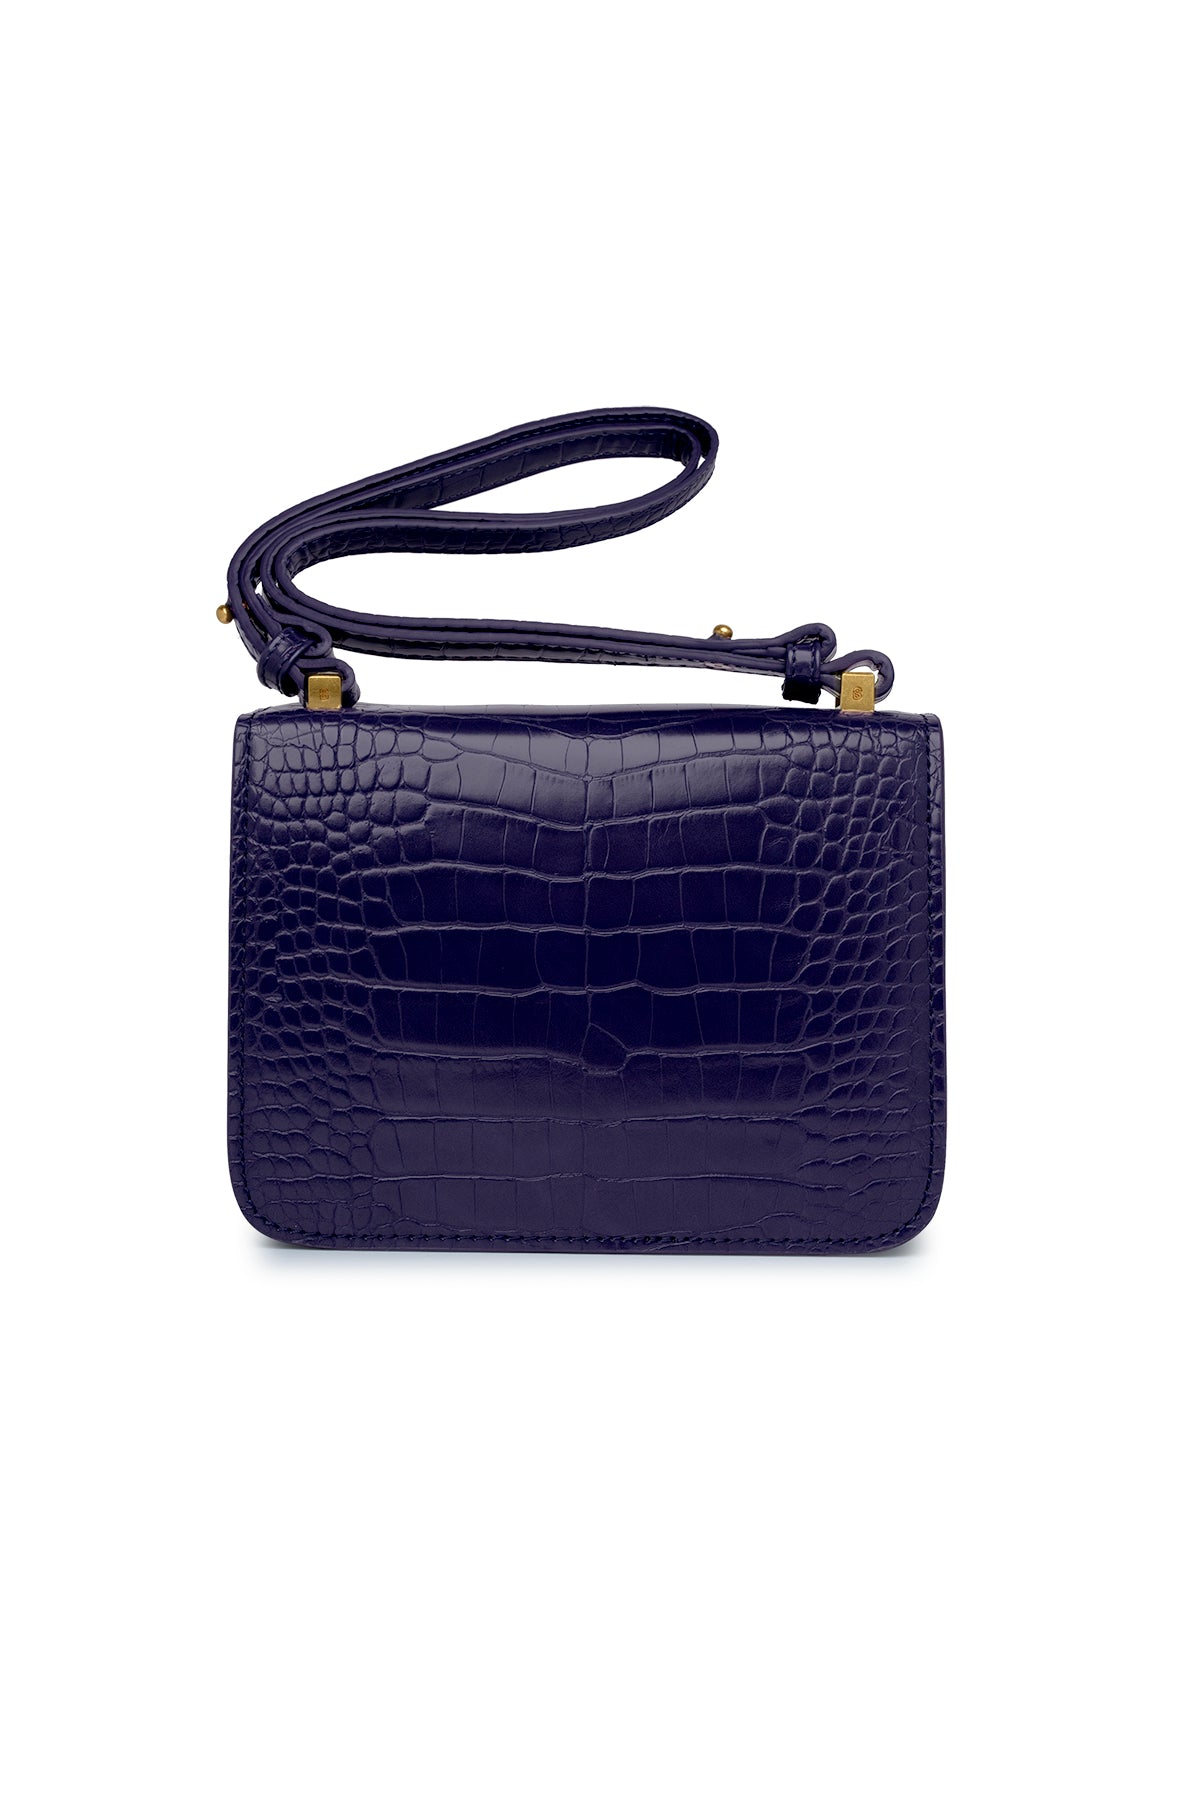 Shop Buttonscarves accessories The Audrey Monogram Bag Small - Black Bag